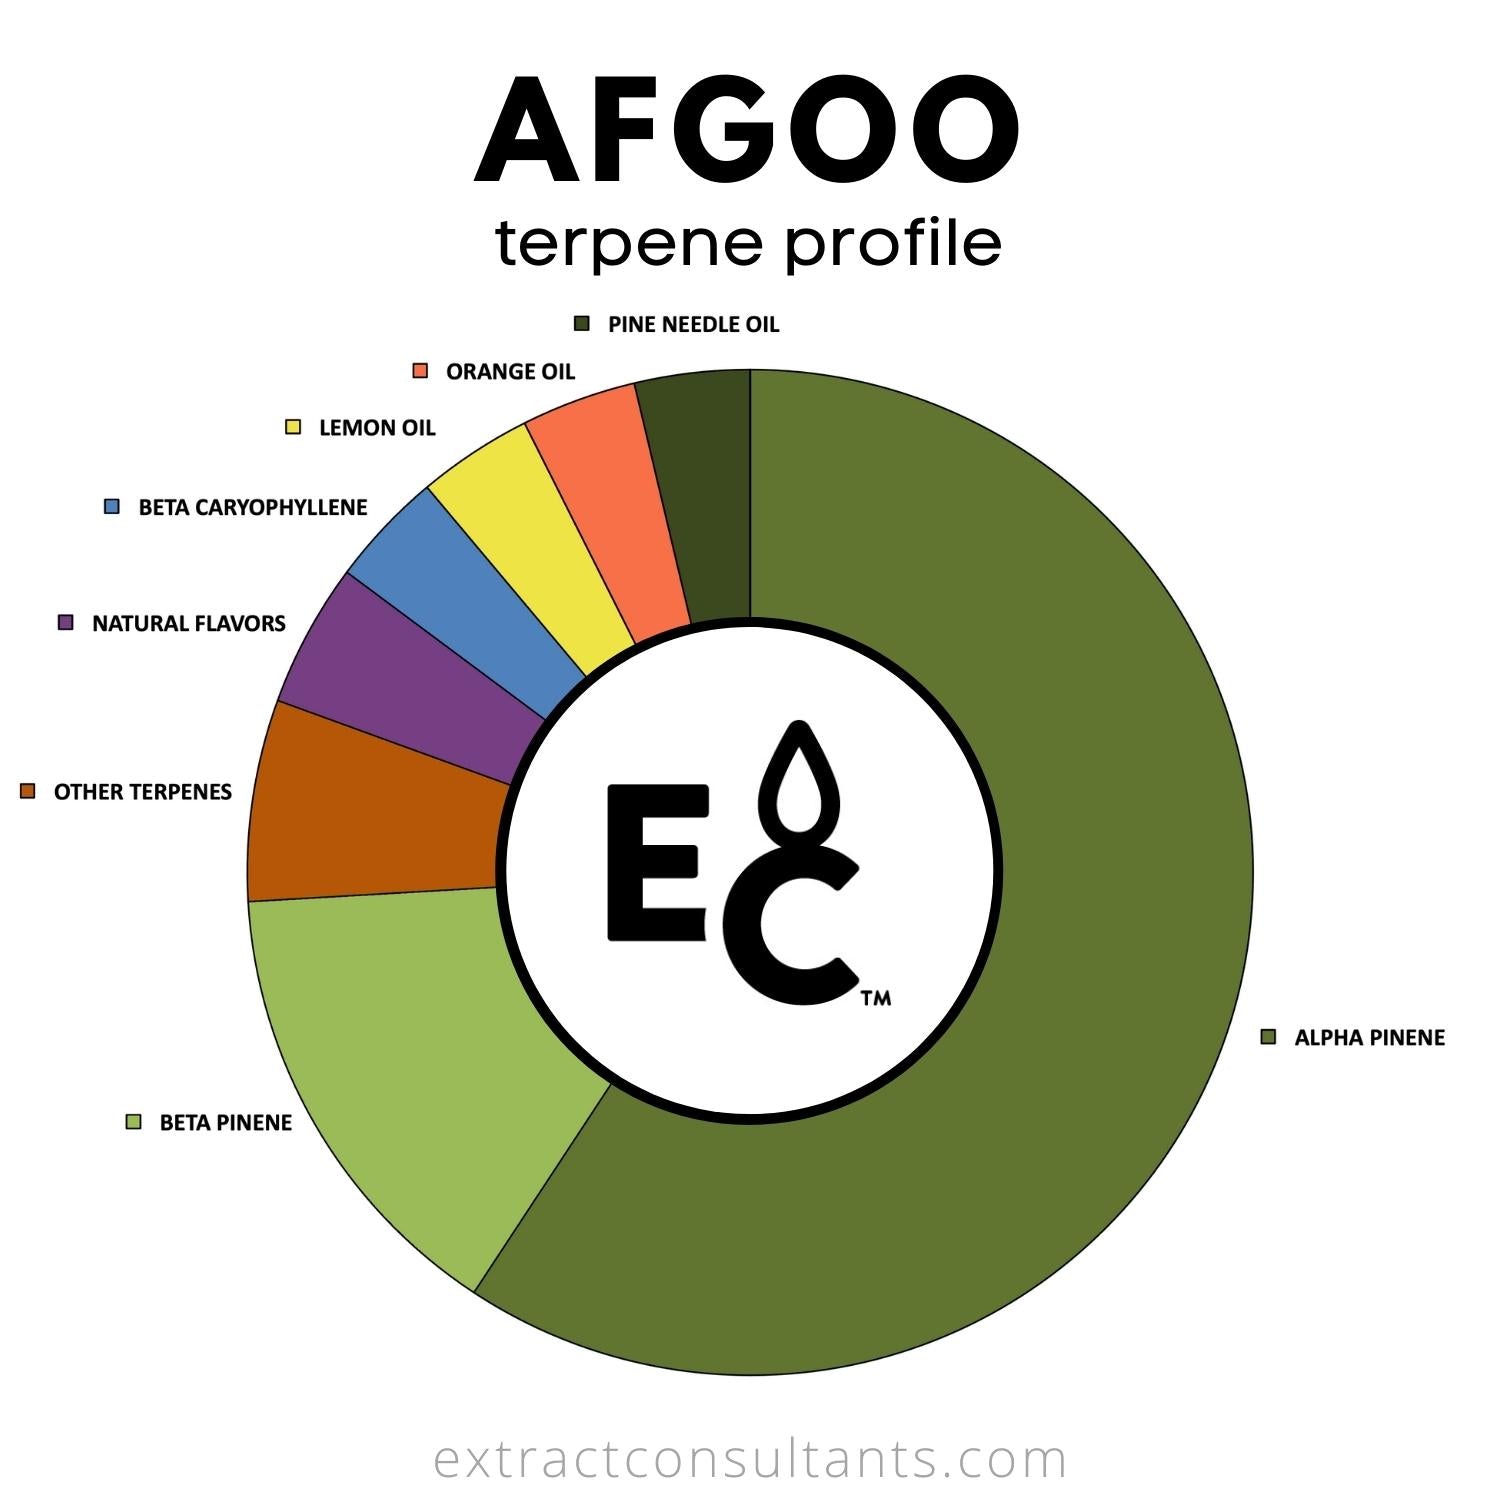 Afgoo terpene profile